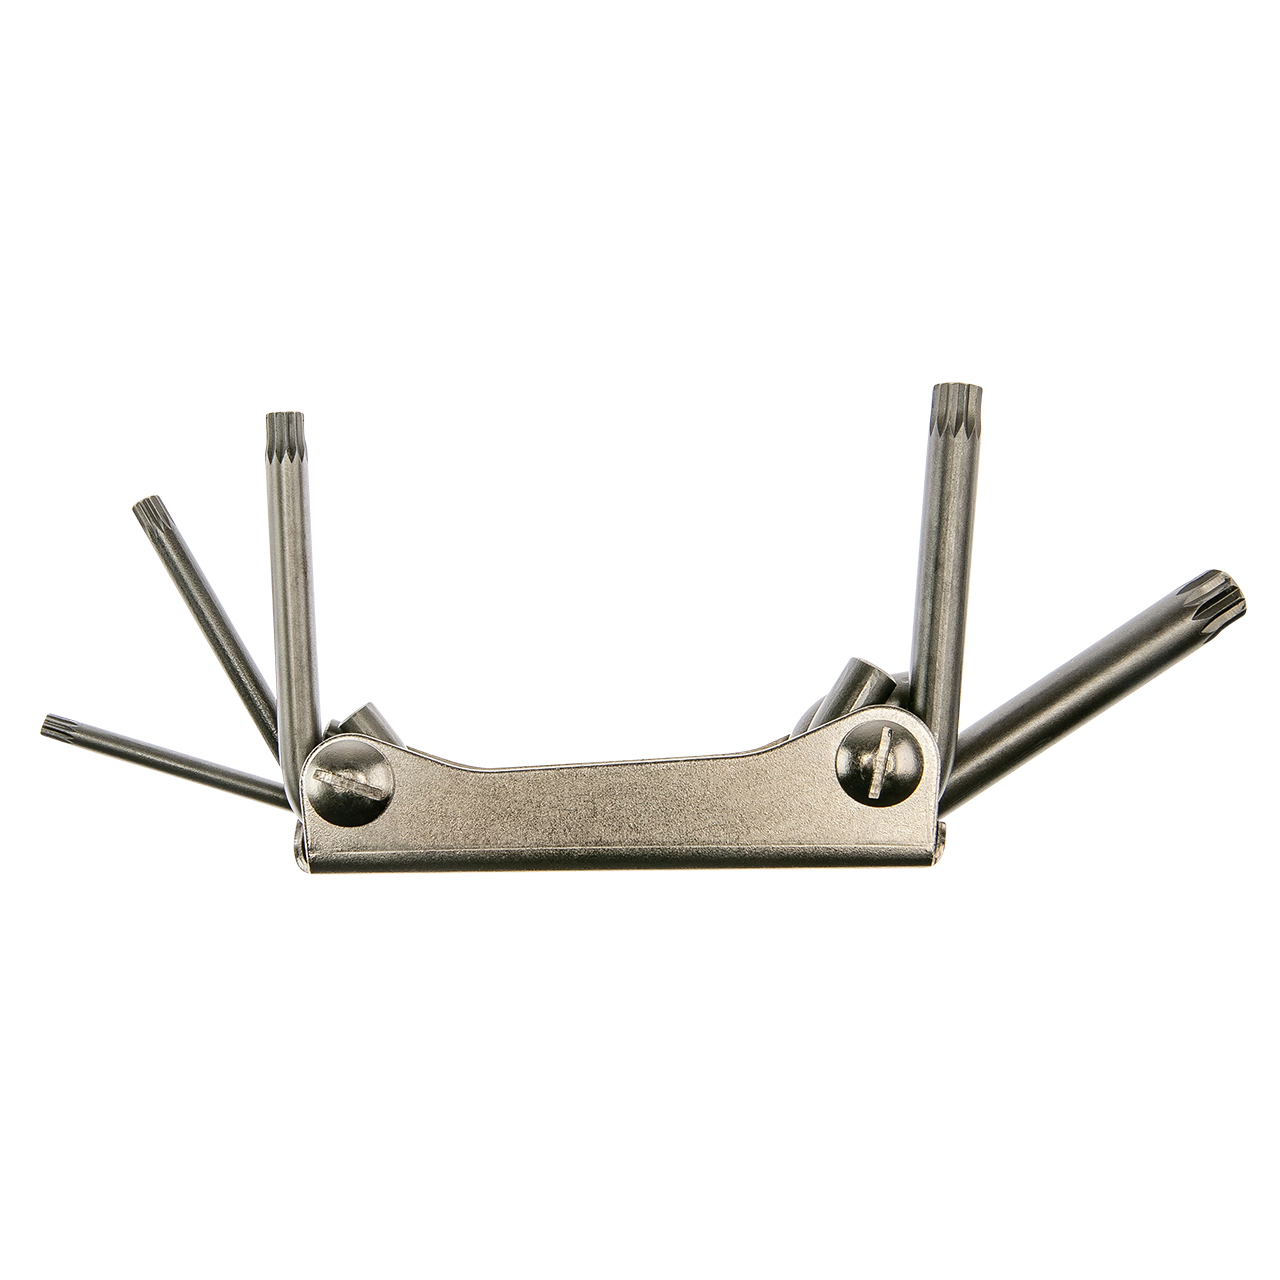 Multi-Spline Key Wrench Set